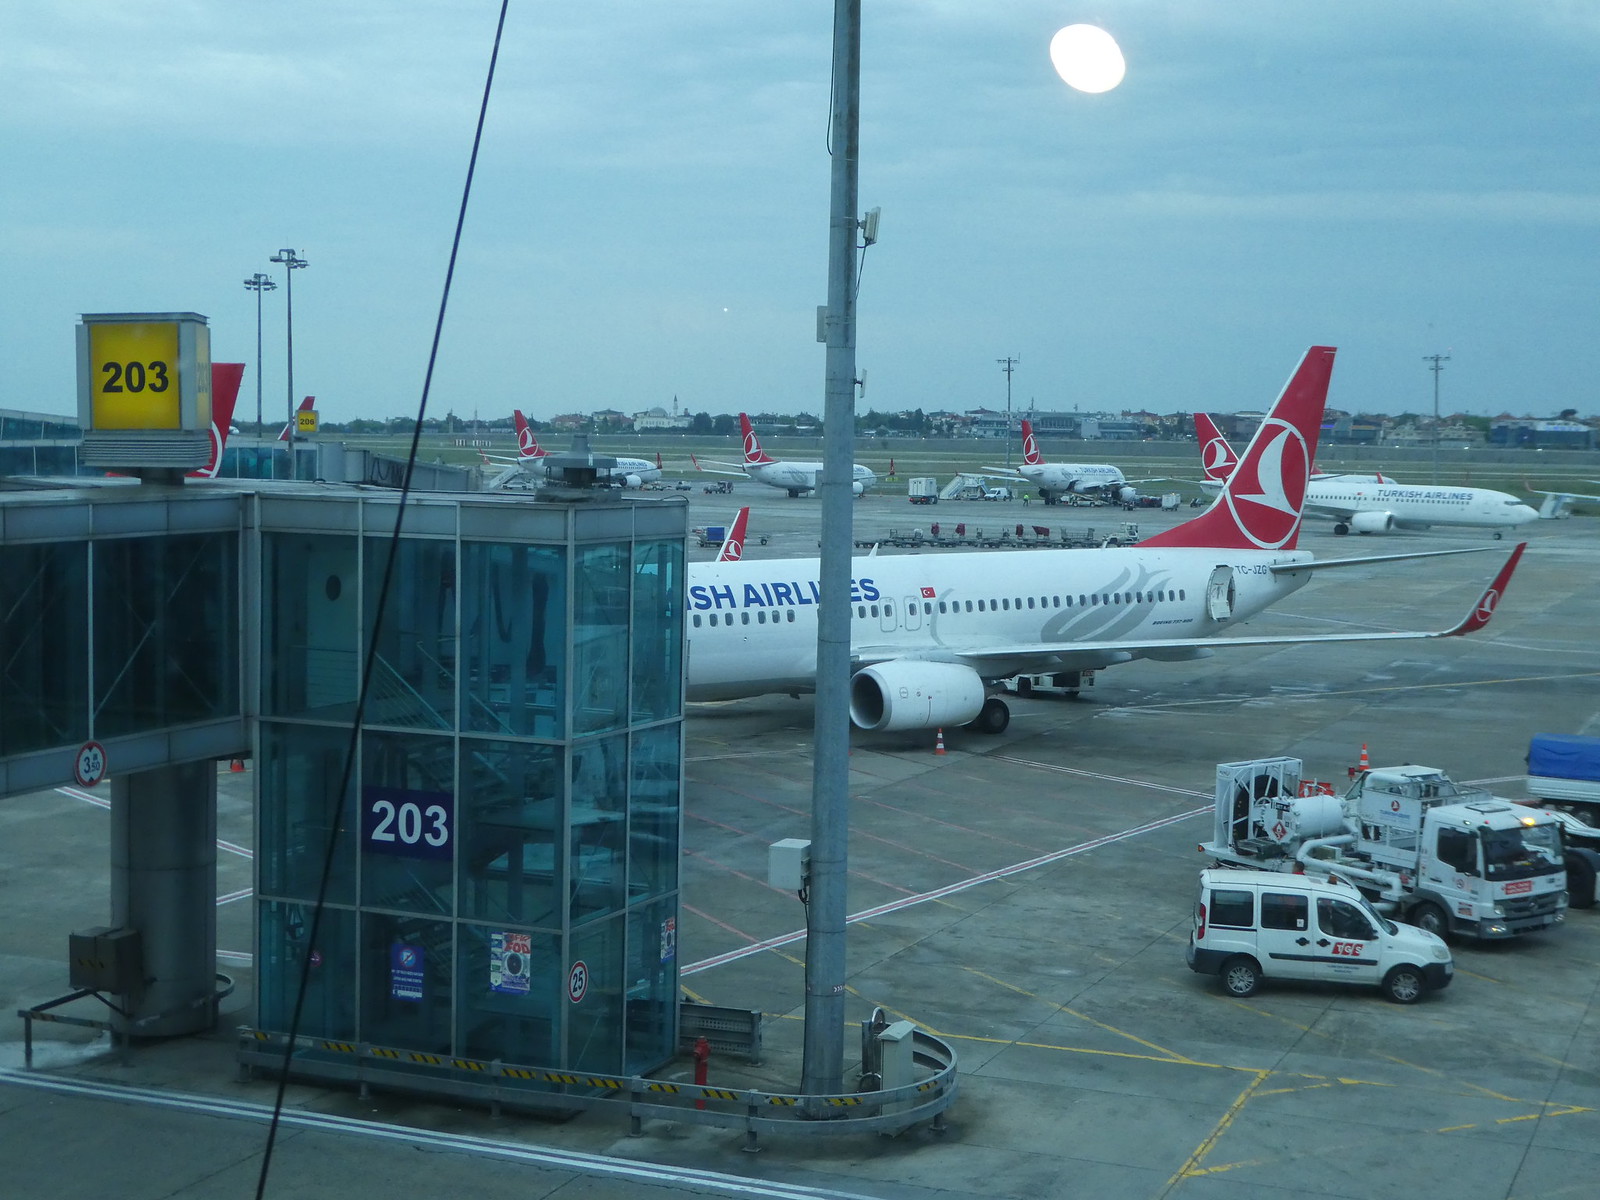 Aturturk Airport, Istanbul